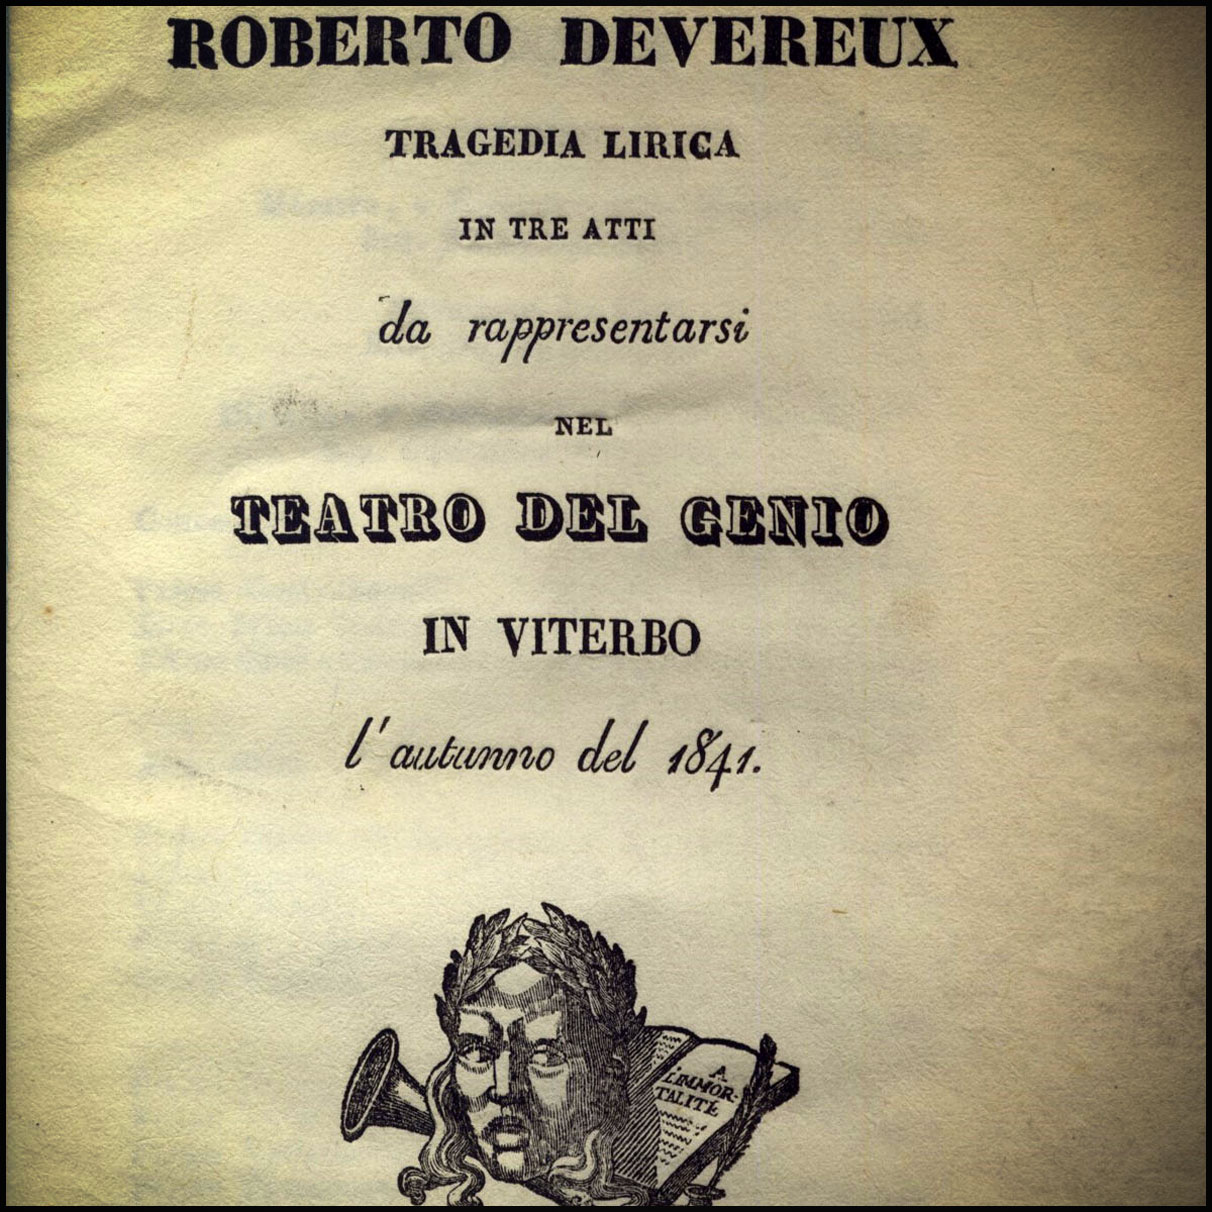 Viterbo, Roberto Devereux - Teatro del Genio